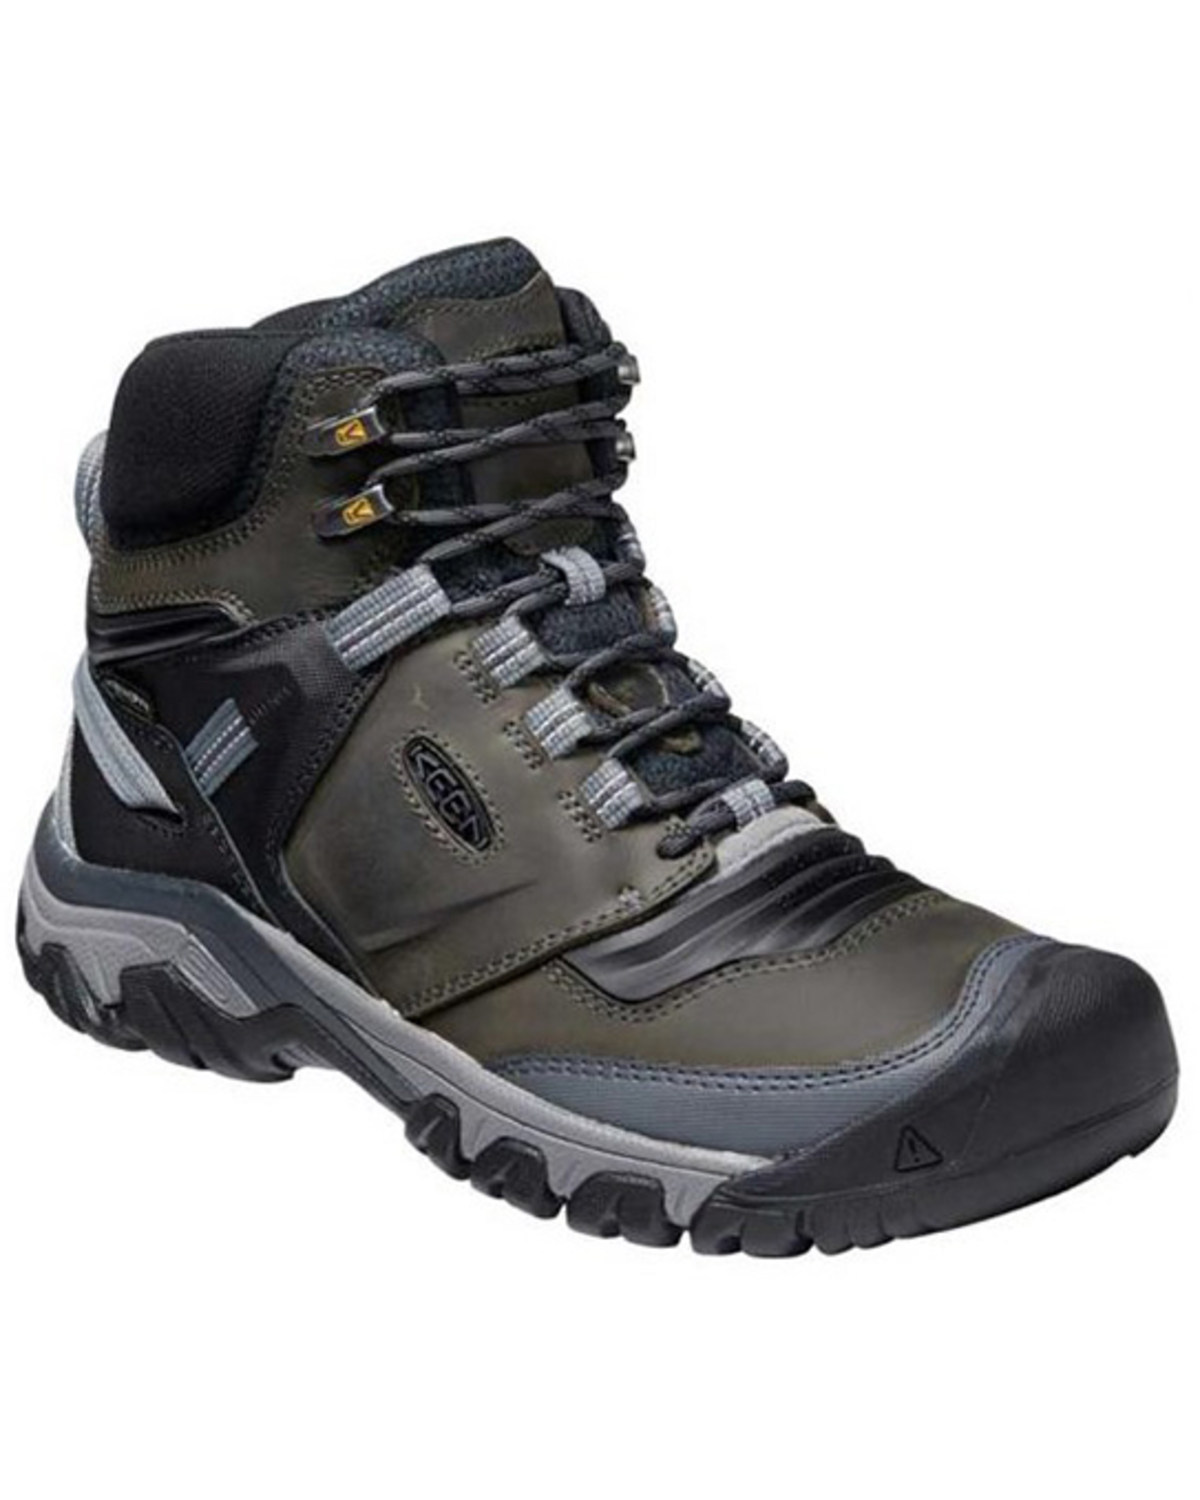 Keen Men's Rudge Flex Waterproof Hiking Boots - Soft Toe